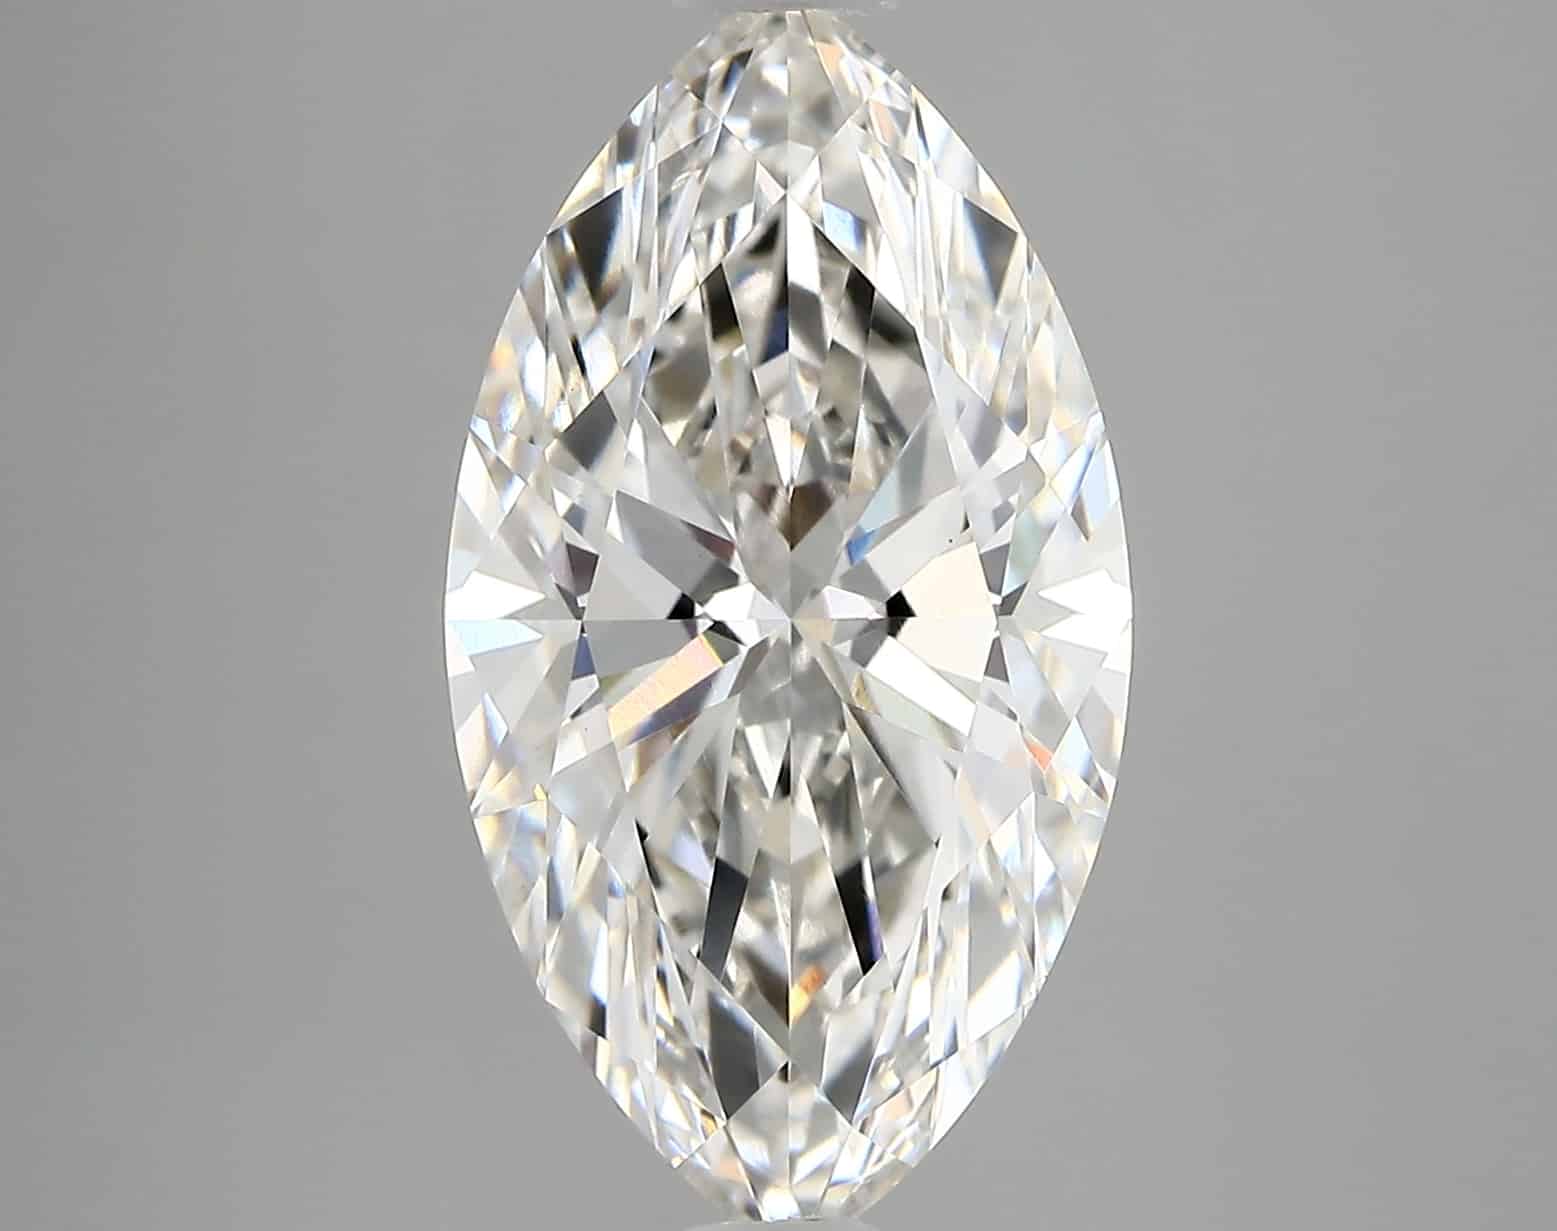 Lab Grown 3.07 Carat Diamond IGI Certified vvs2 clarity and G color